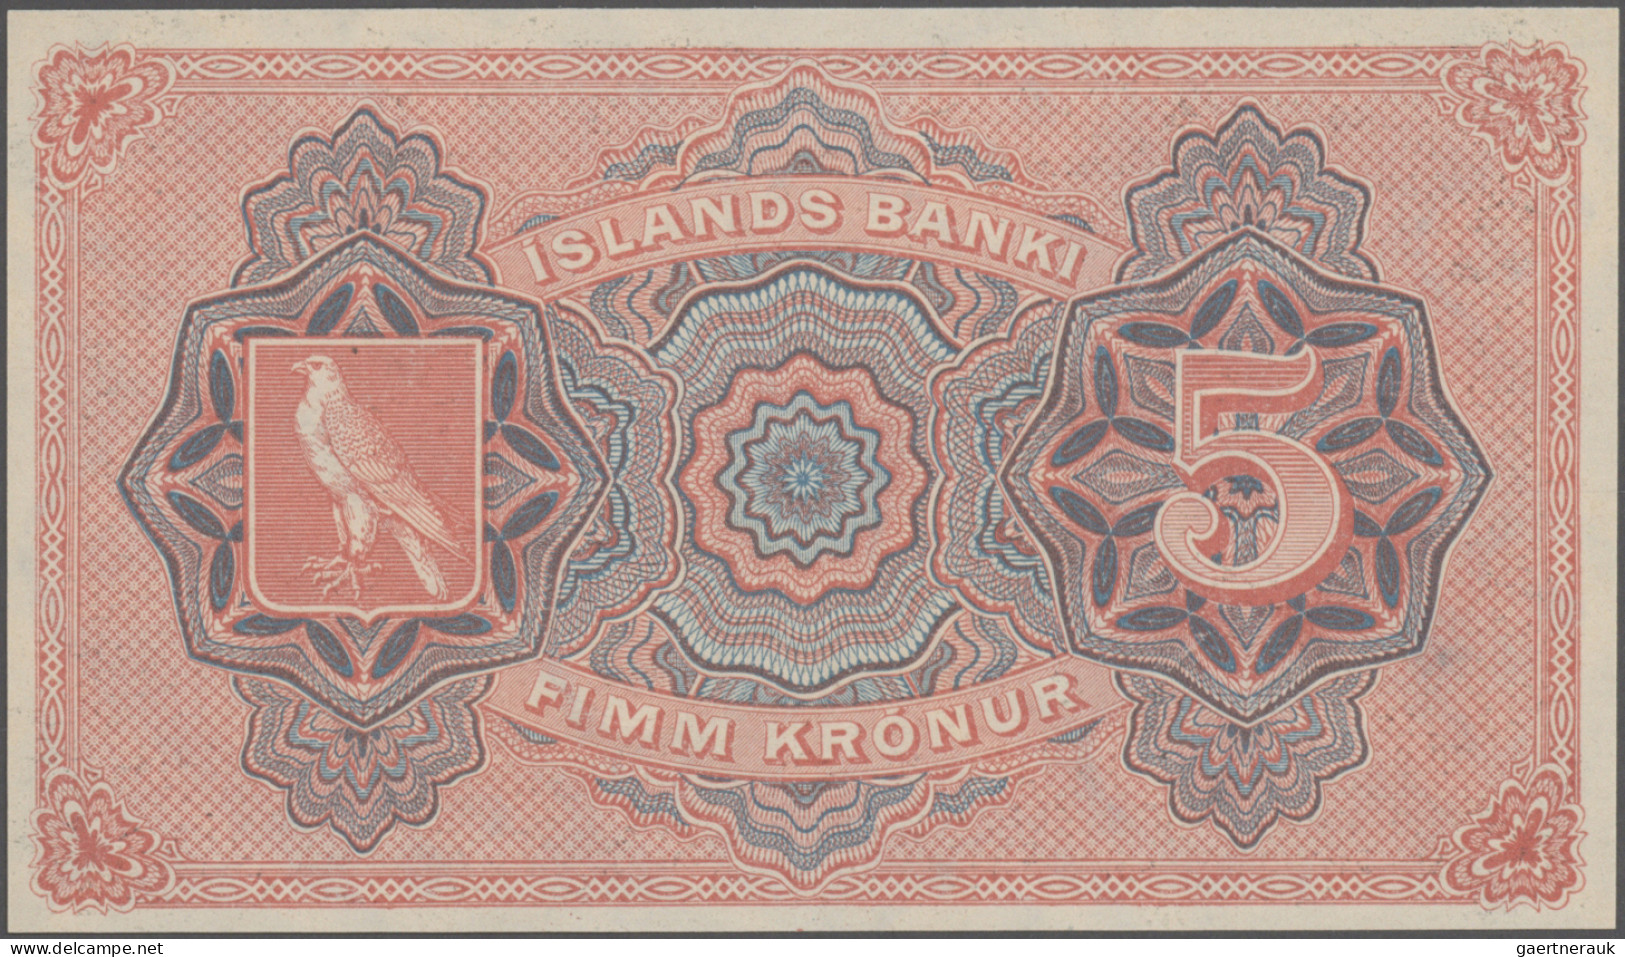 Iceland: Islands Banki, 5 Kronur 1920 Remainder With One Signature Only, P.15r I - IJsland